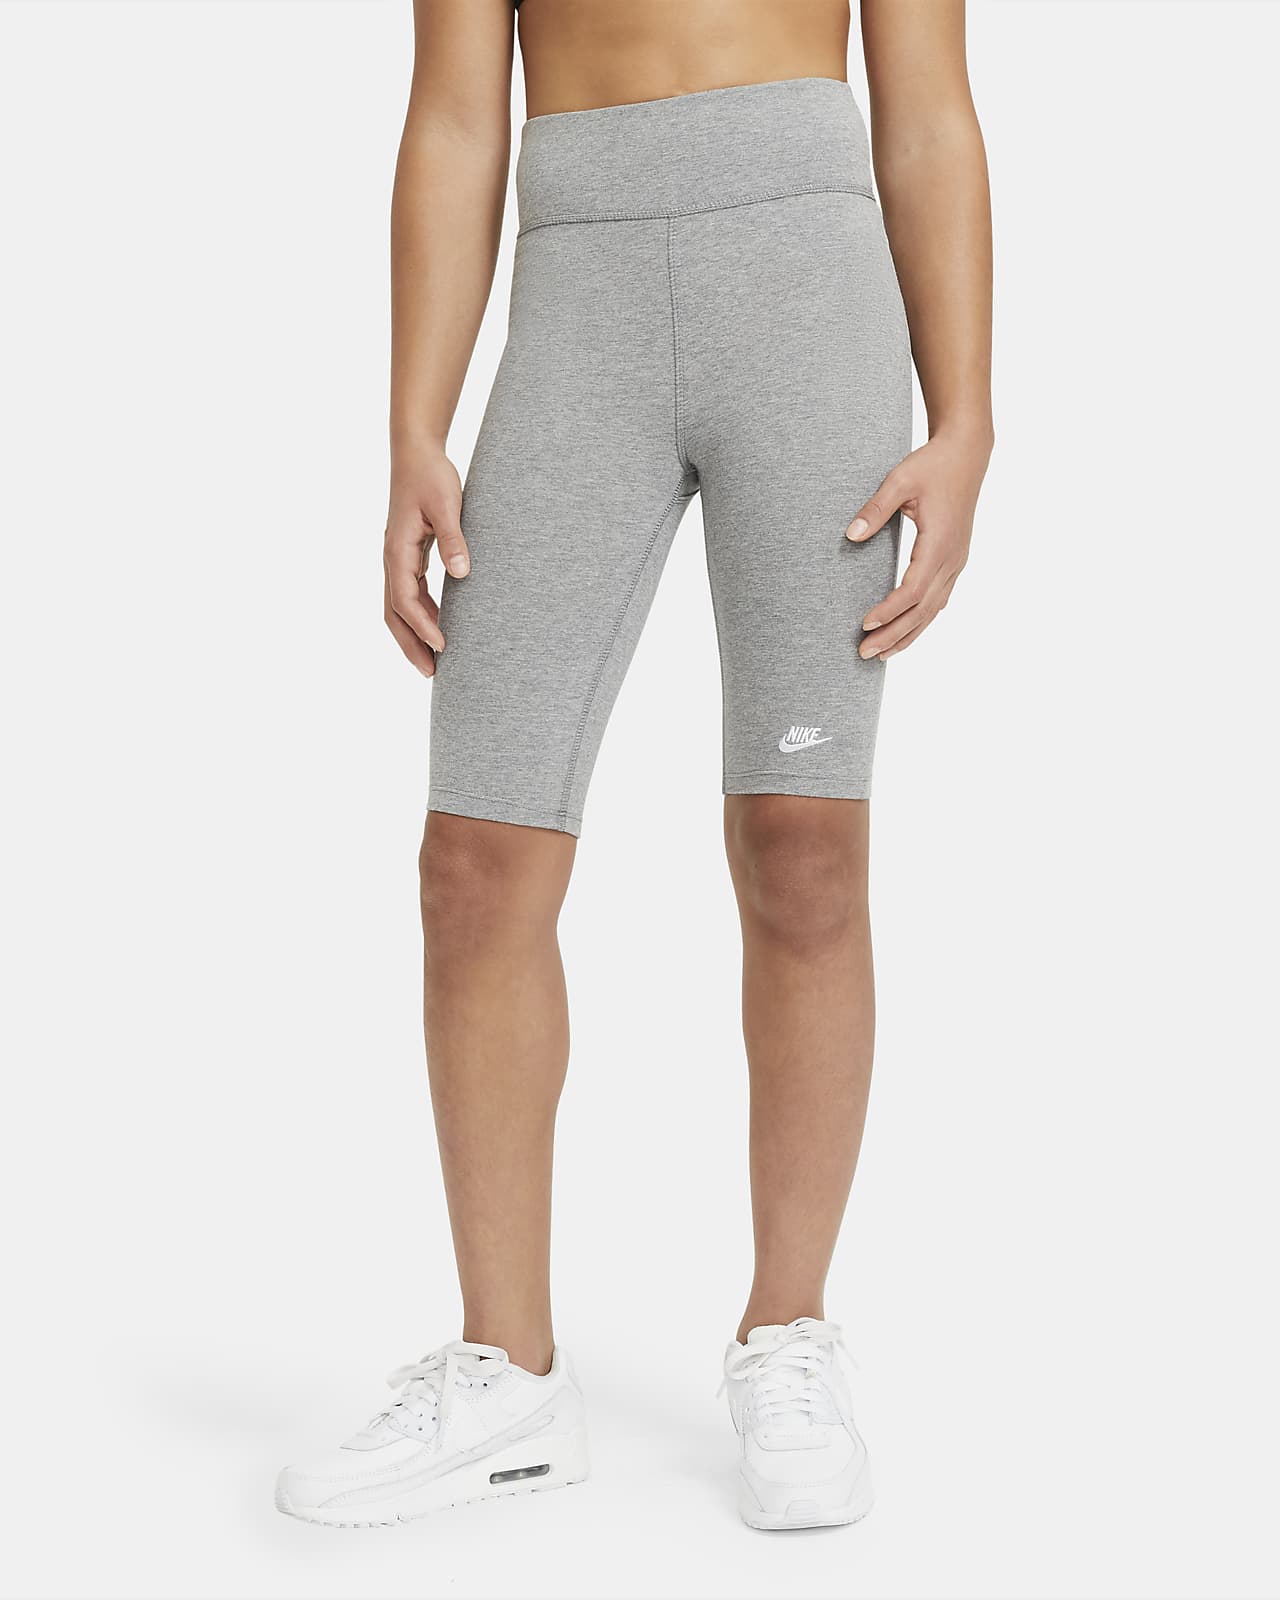 girls grey cycling shorts